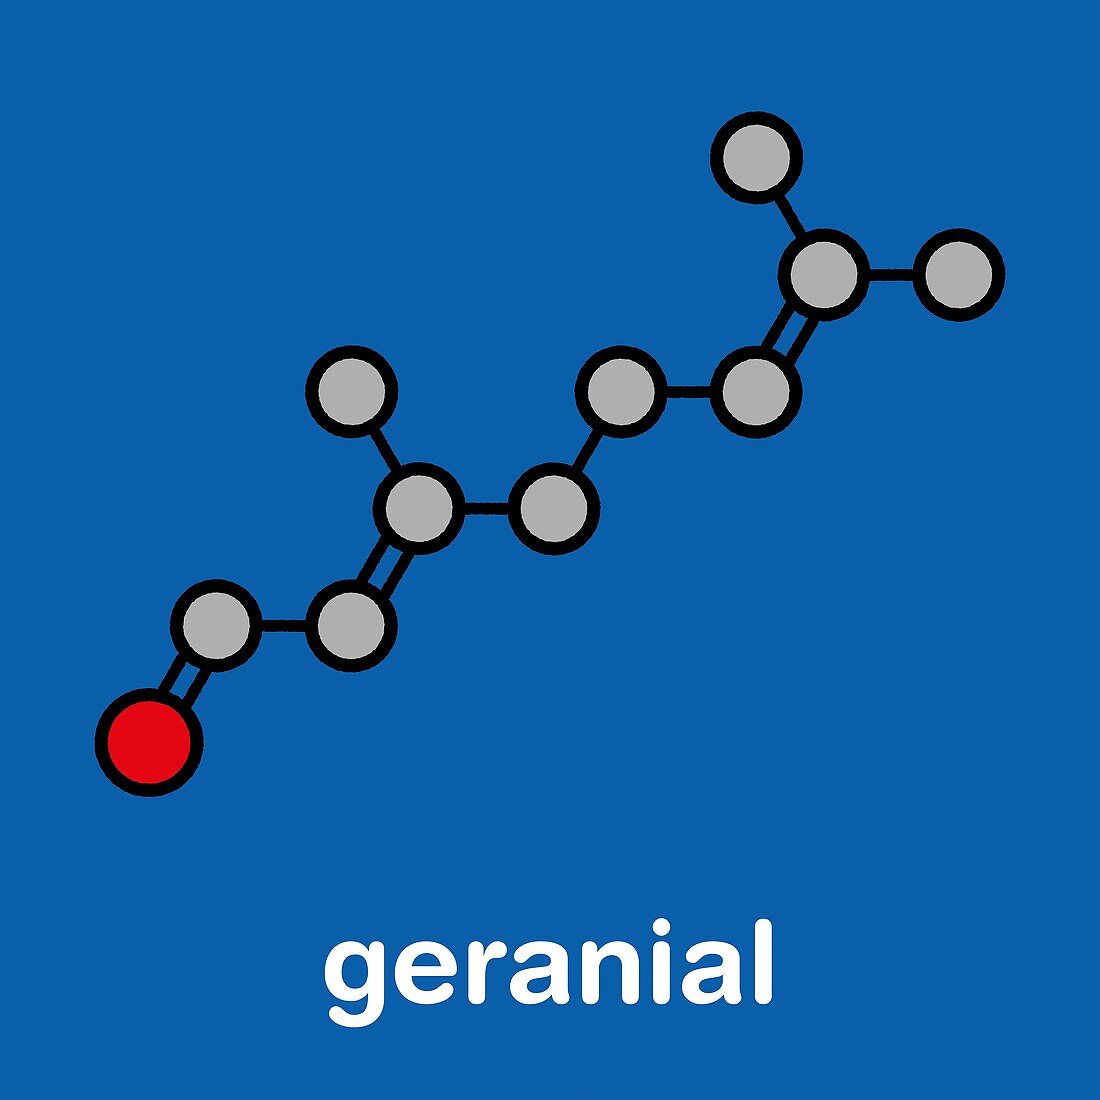 Geranial lemon fragrance molecule, illustration